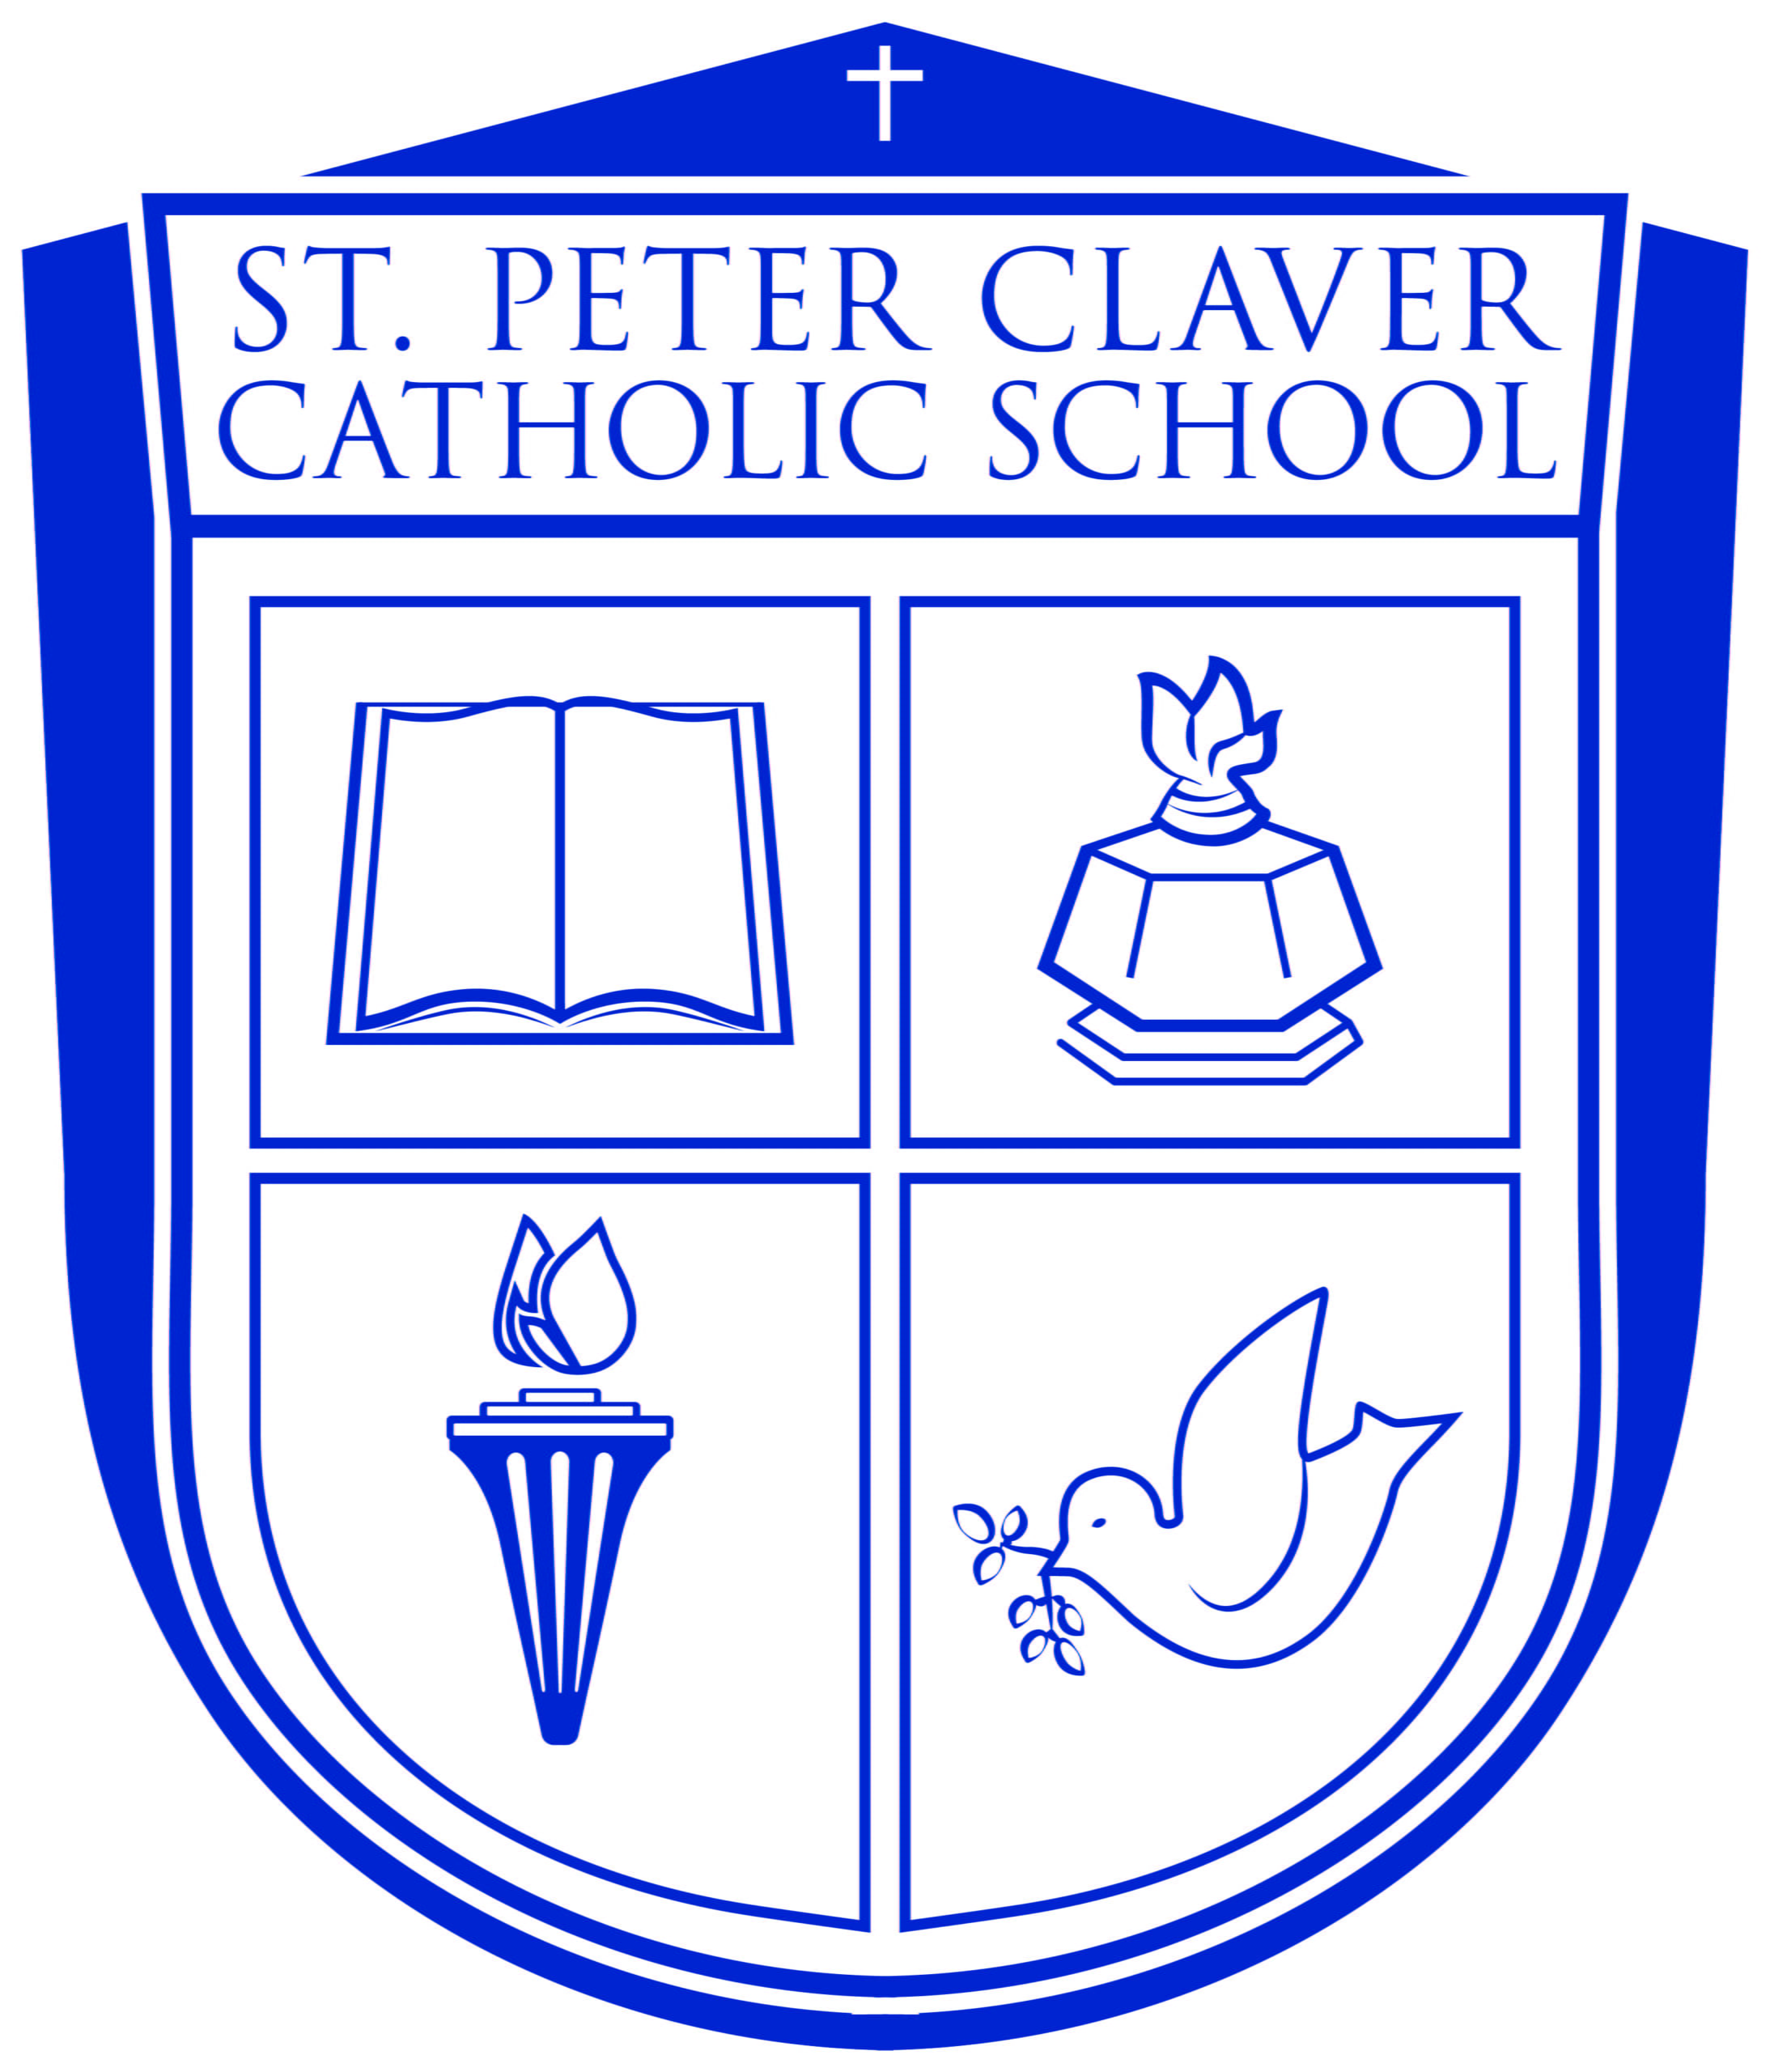 St. Peter Claver Catholic School logo